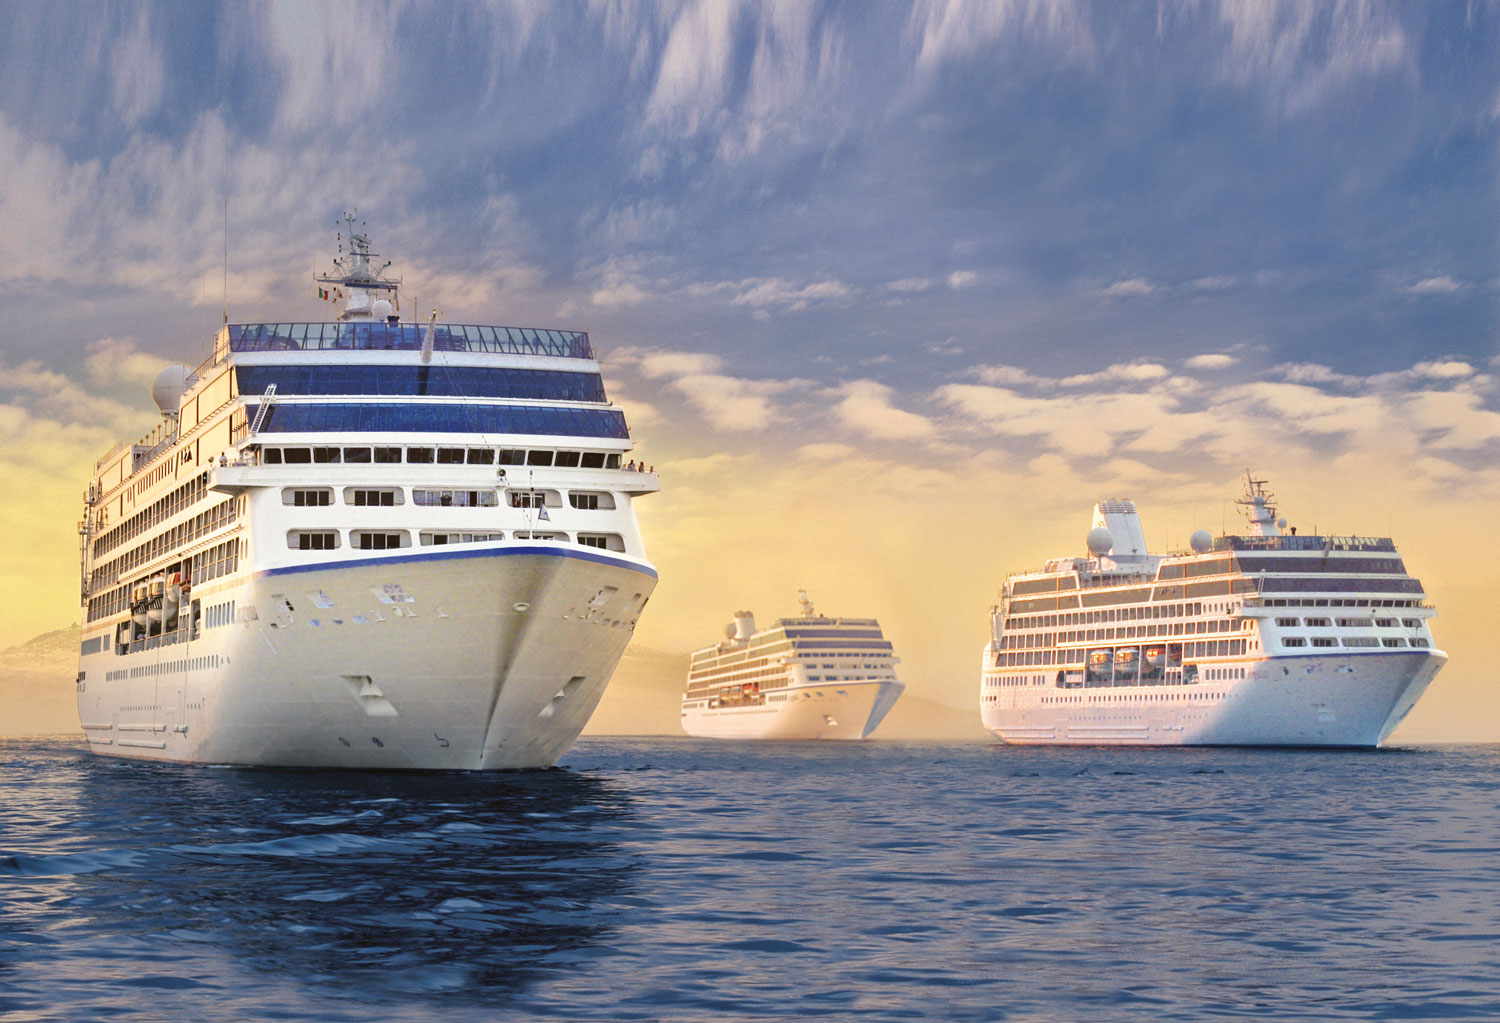 The Oceania Cruises